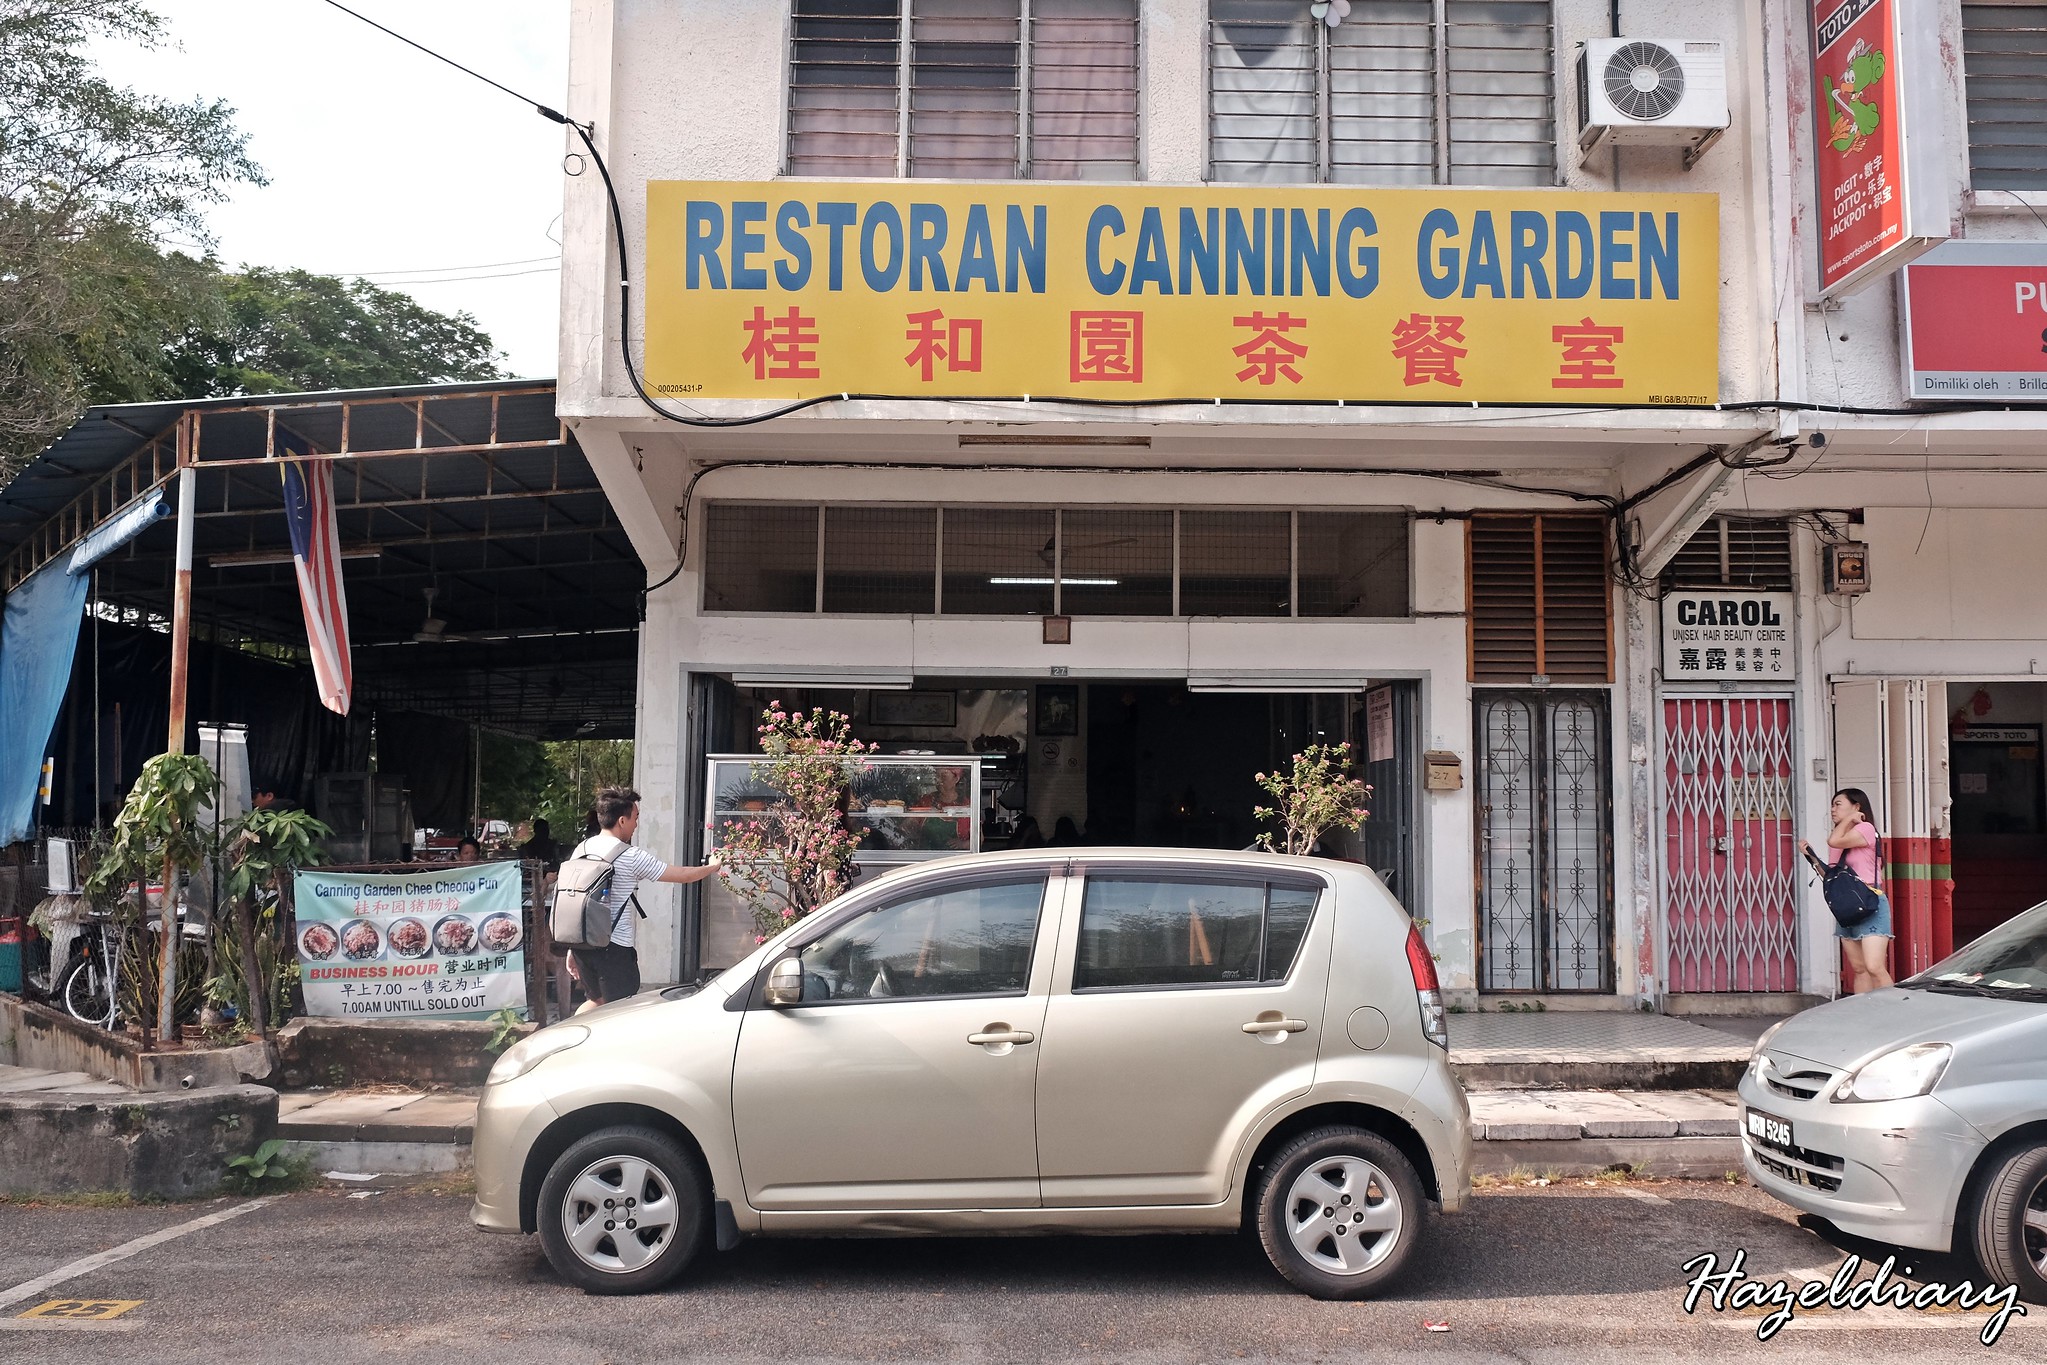 Restoran Canning Garden-Hazeldiary